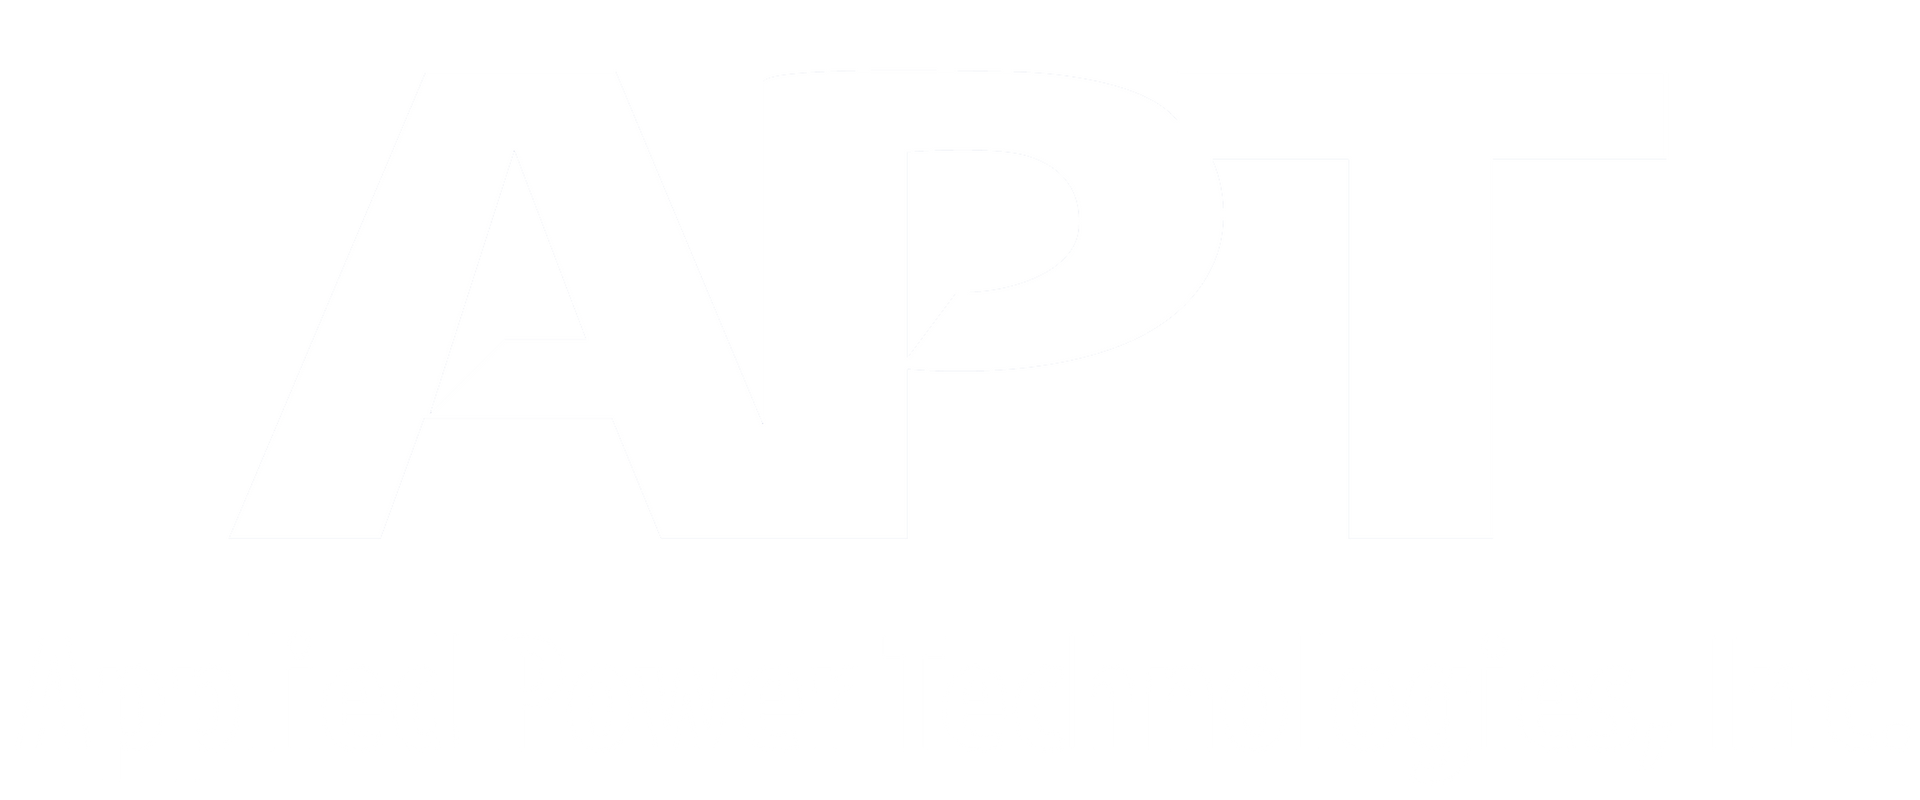 Applied Power Technologies, Inc.
